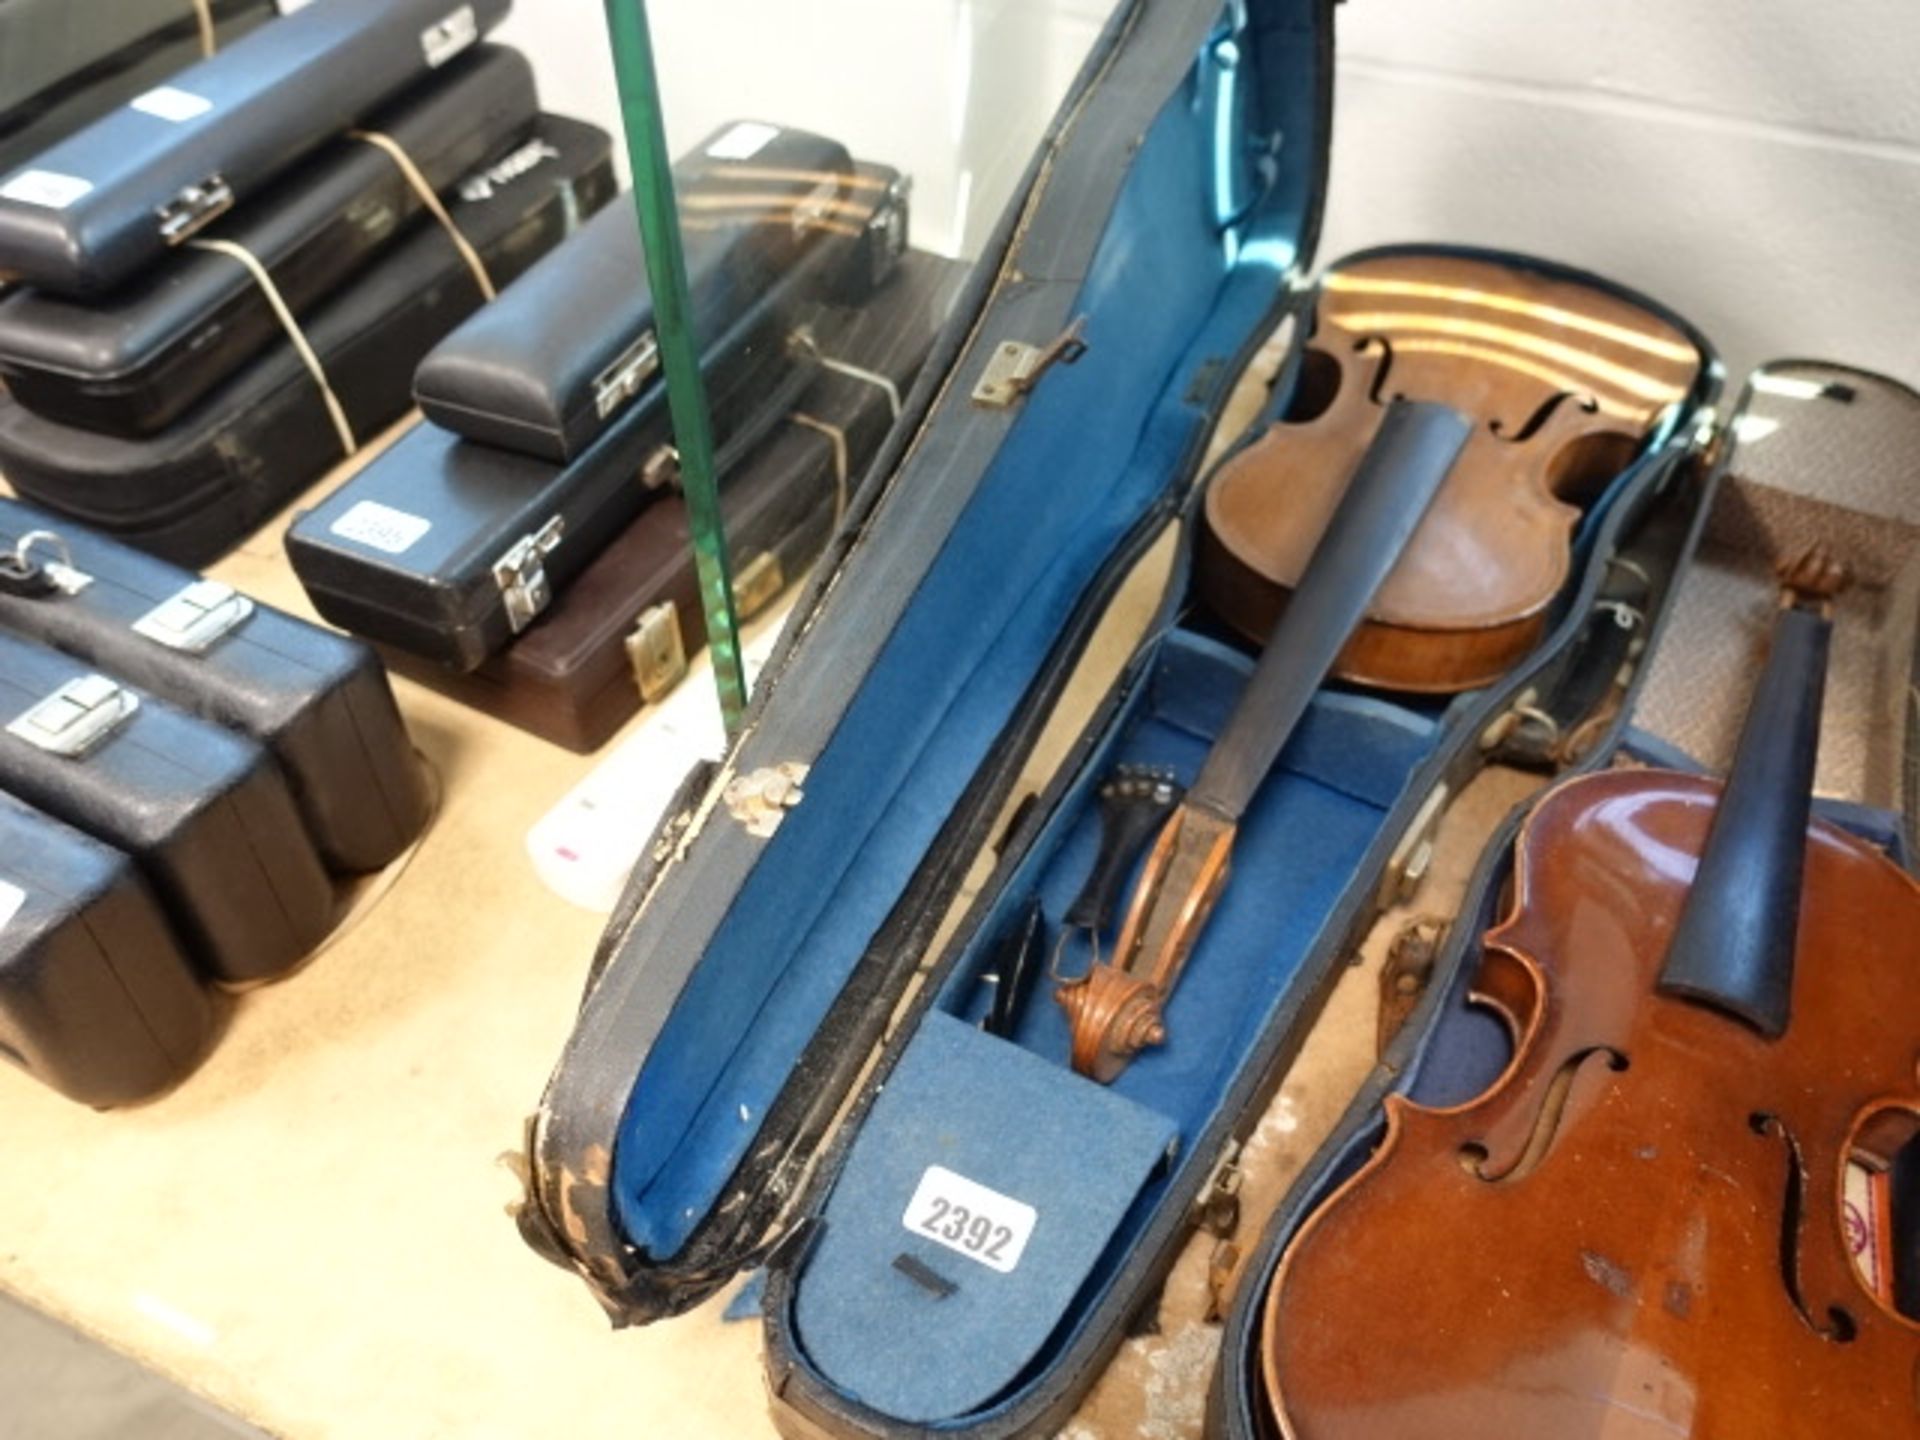 Magini pattern violin in wooden case